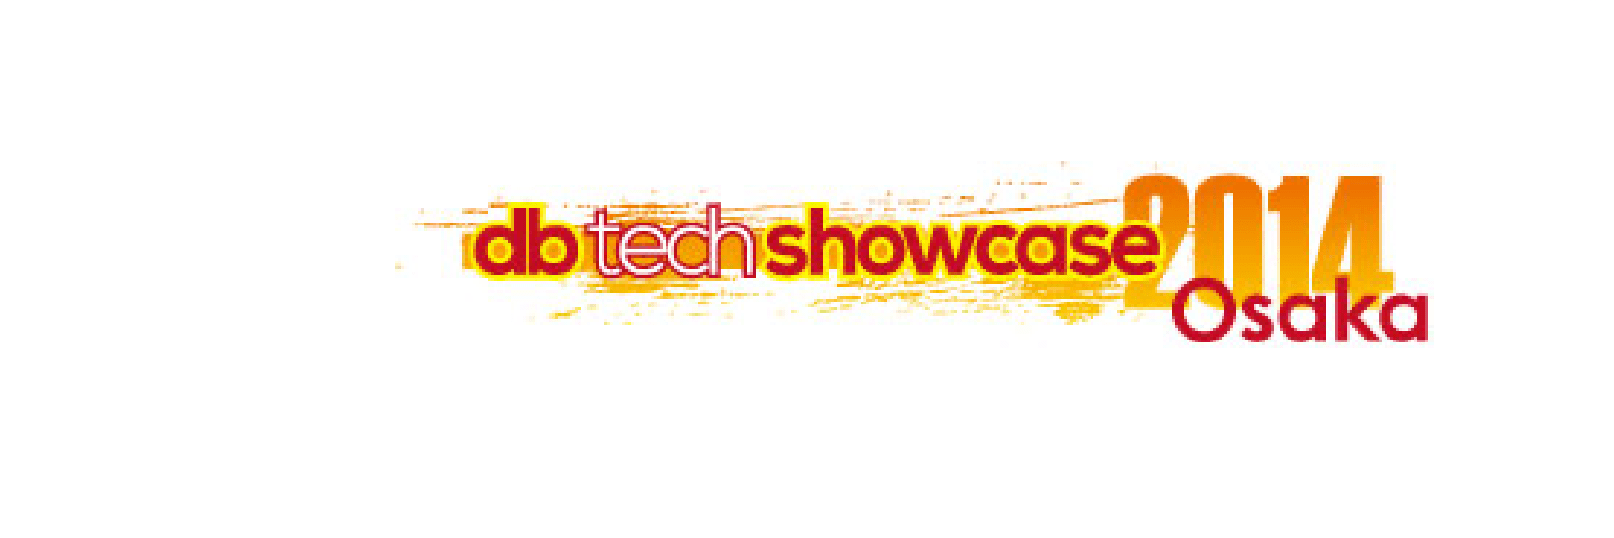 db tech showcase Osaka 2014